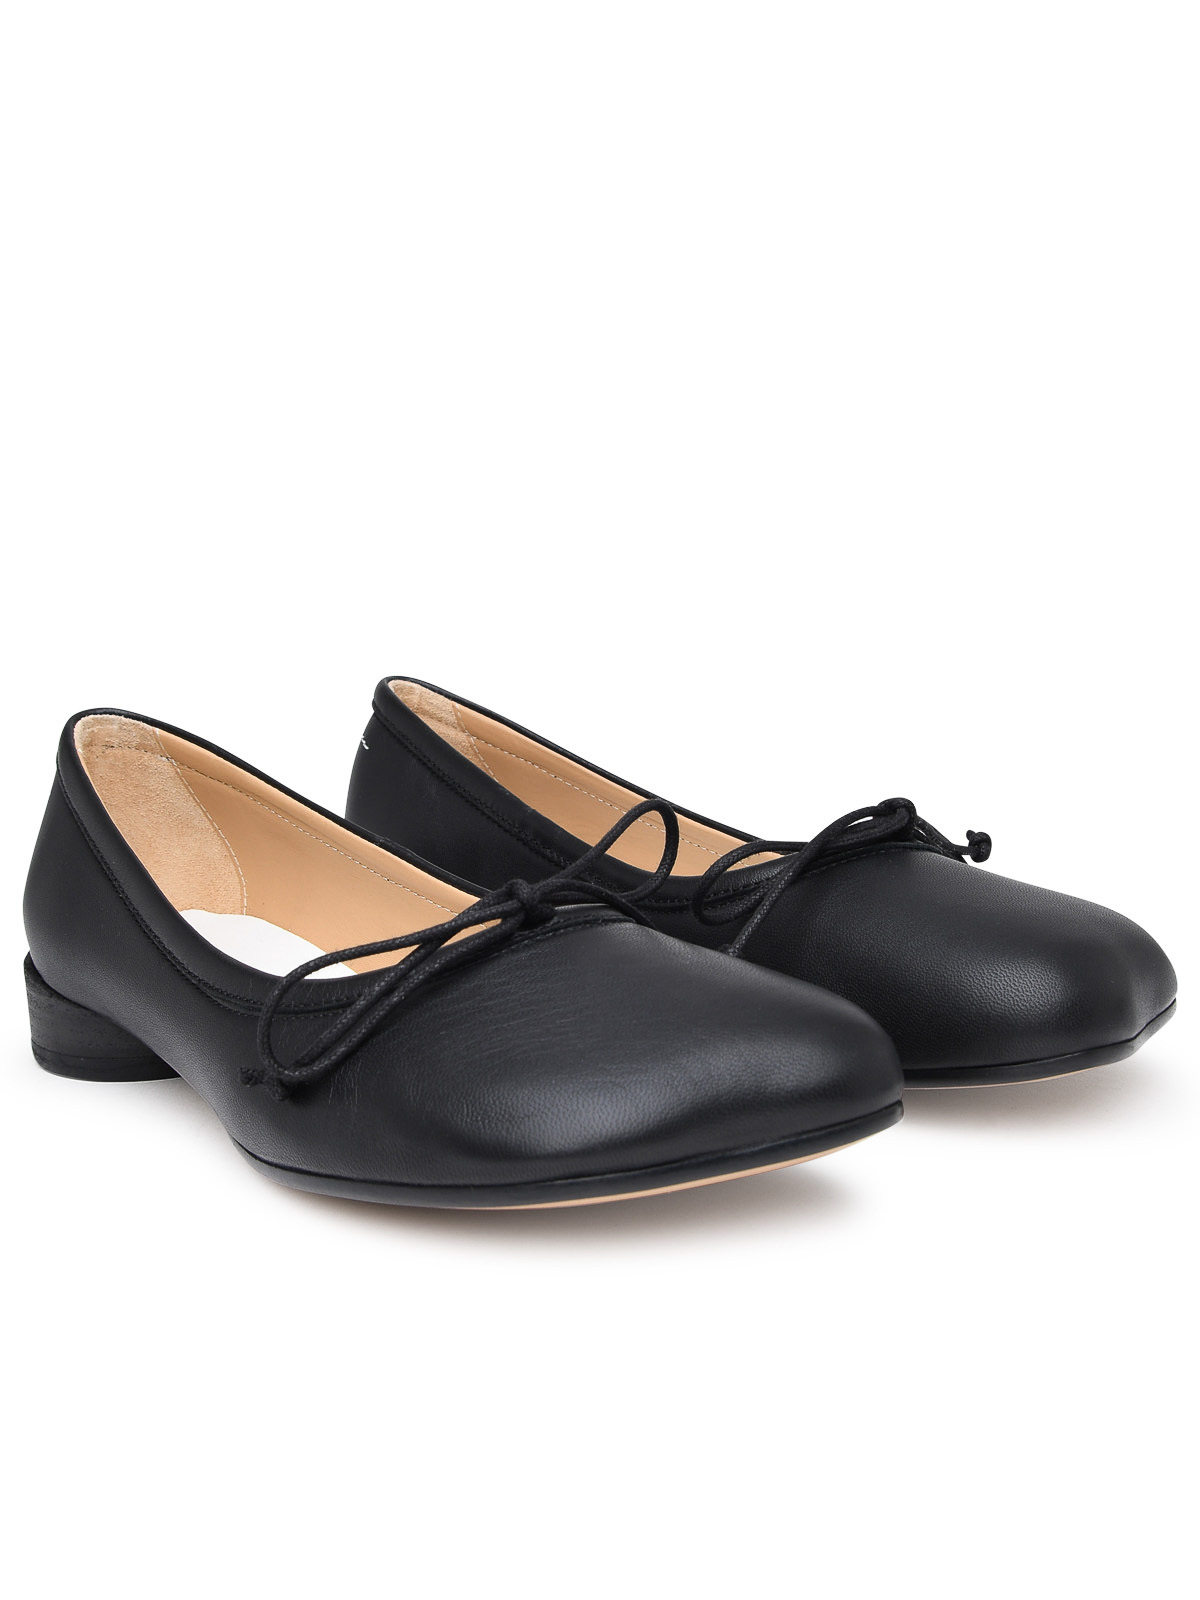 Flat shoes MM6 Maison Margiela   Ballerina in black leather